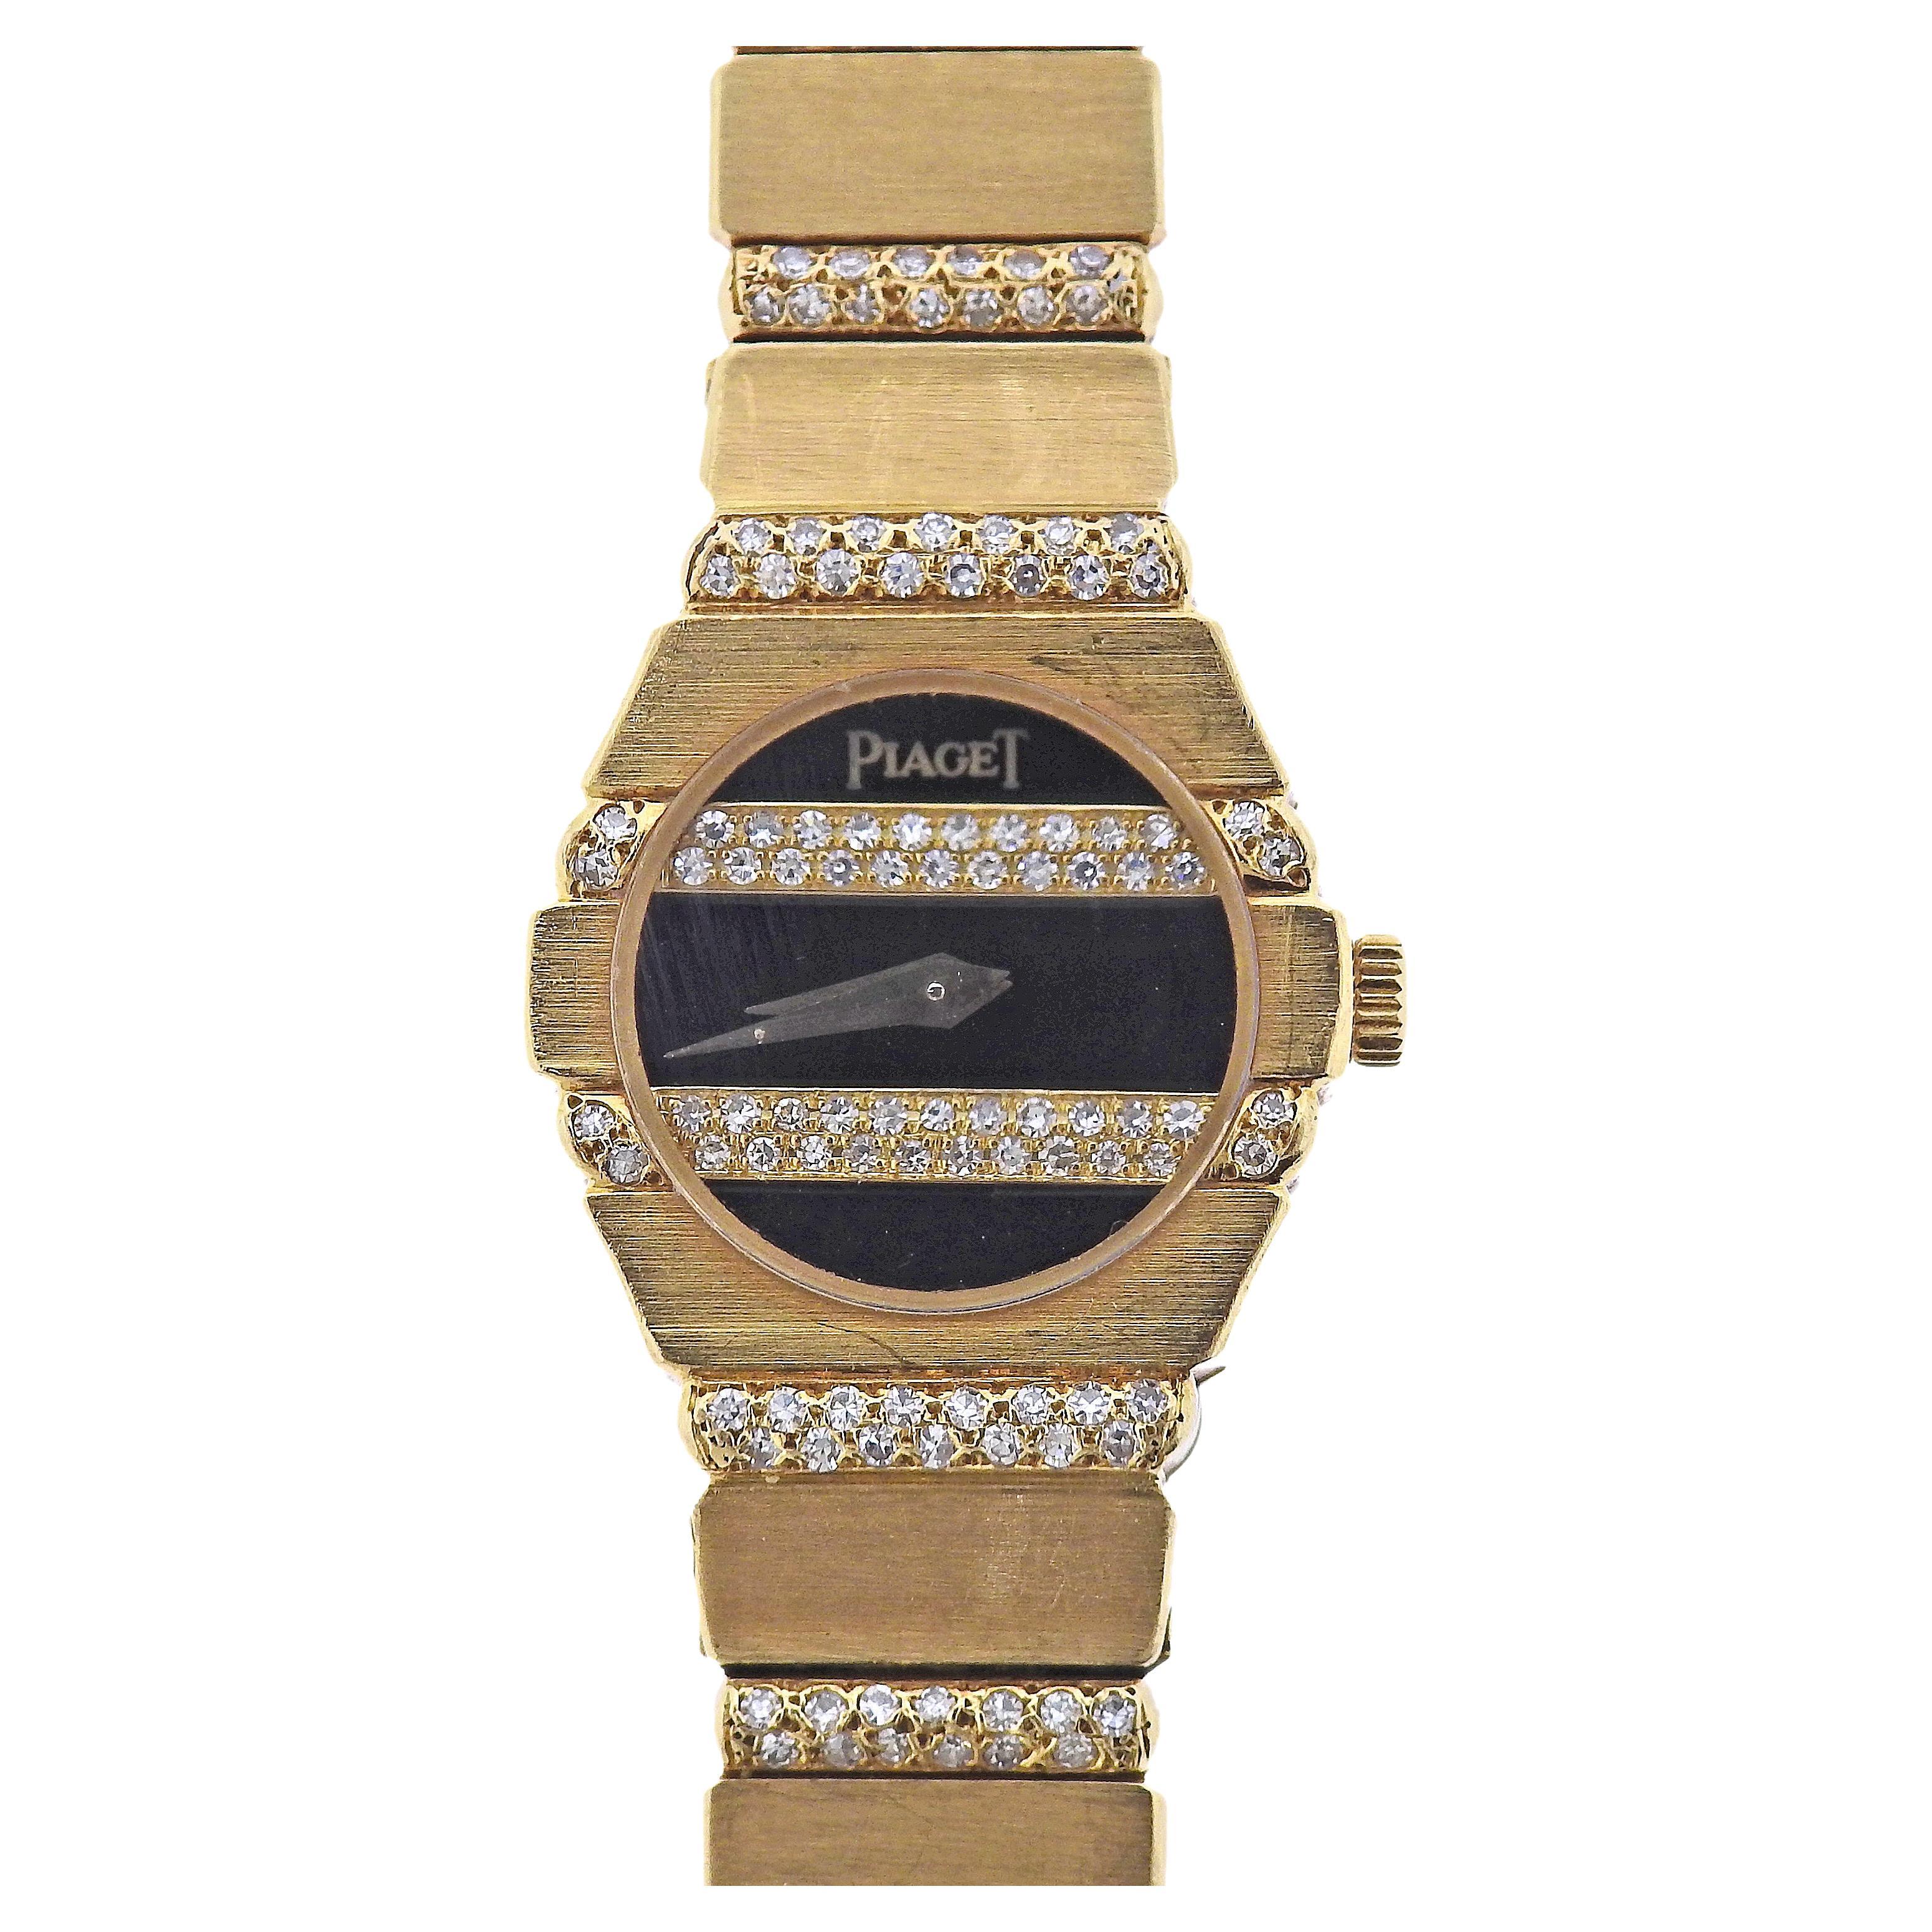 Piaget Polo Diamond Gold Watch